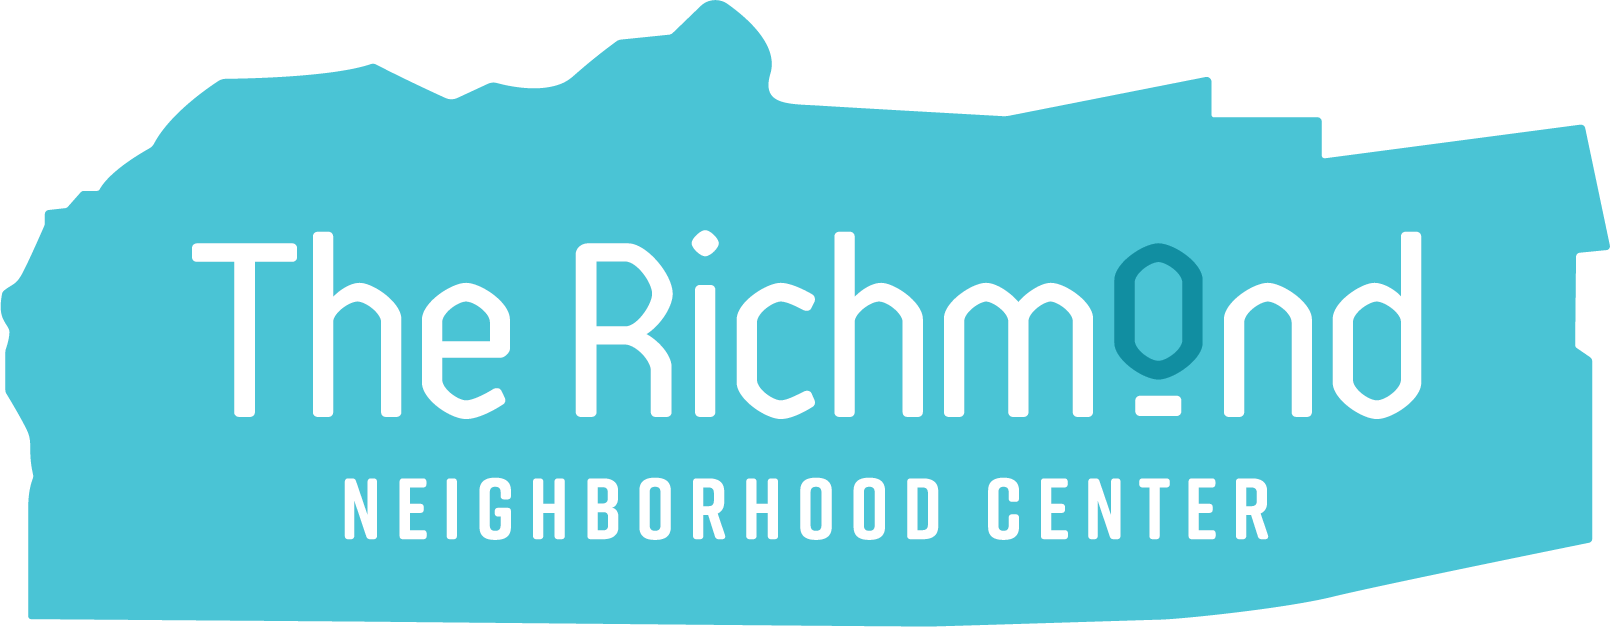 The Richmond Neighborhood Center Logo